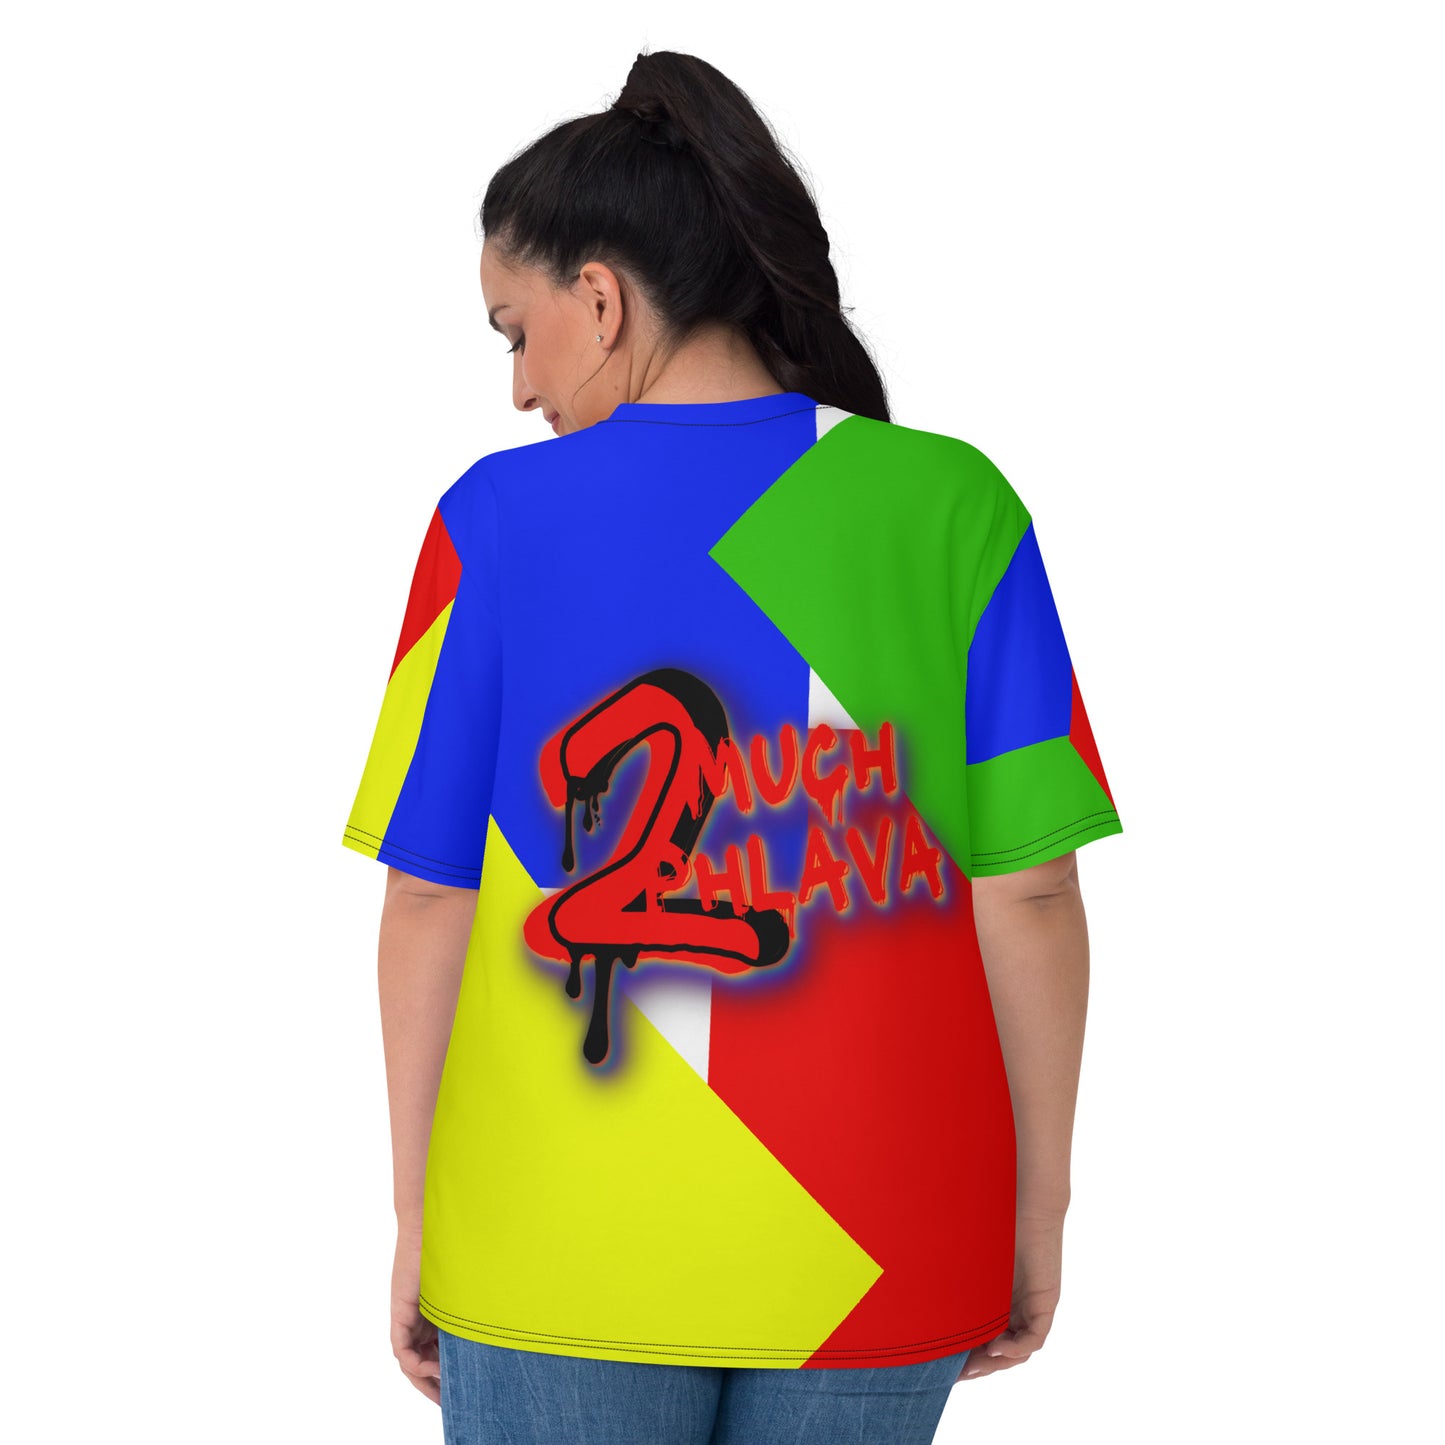 Women's T-shirt 'TMP G48' Colorful